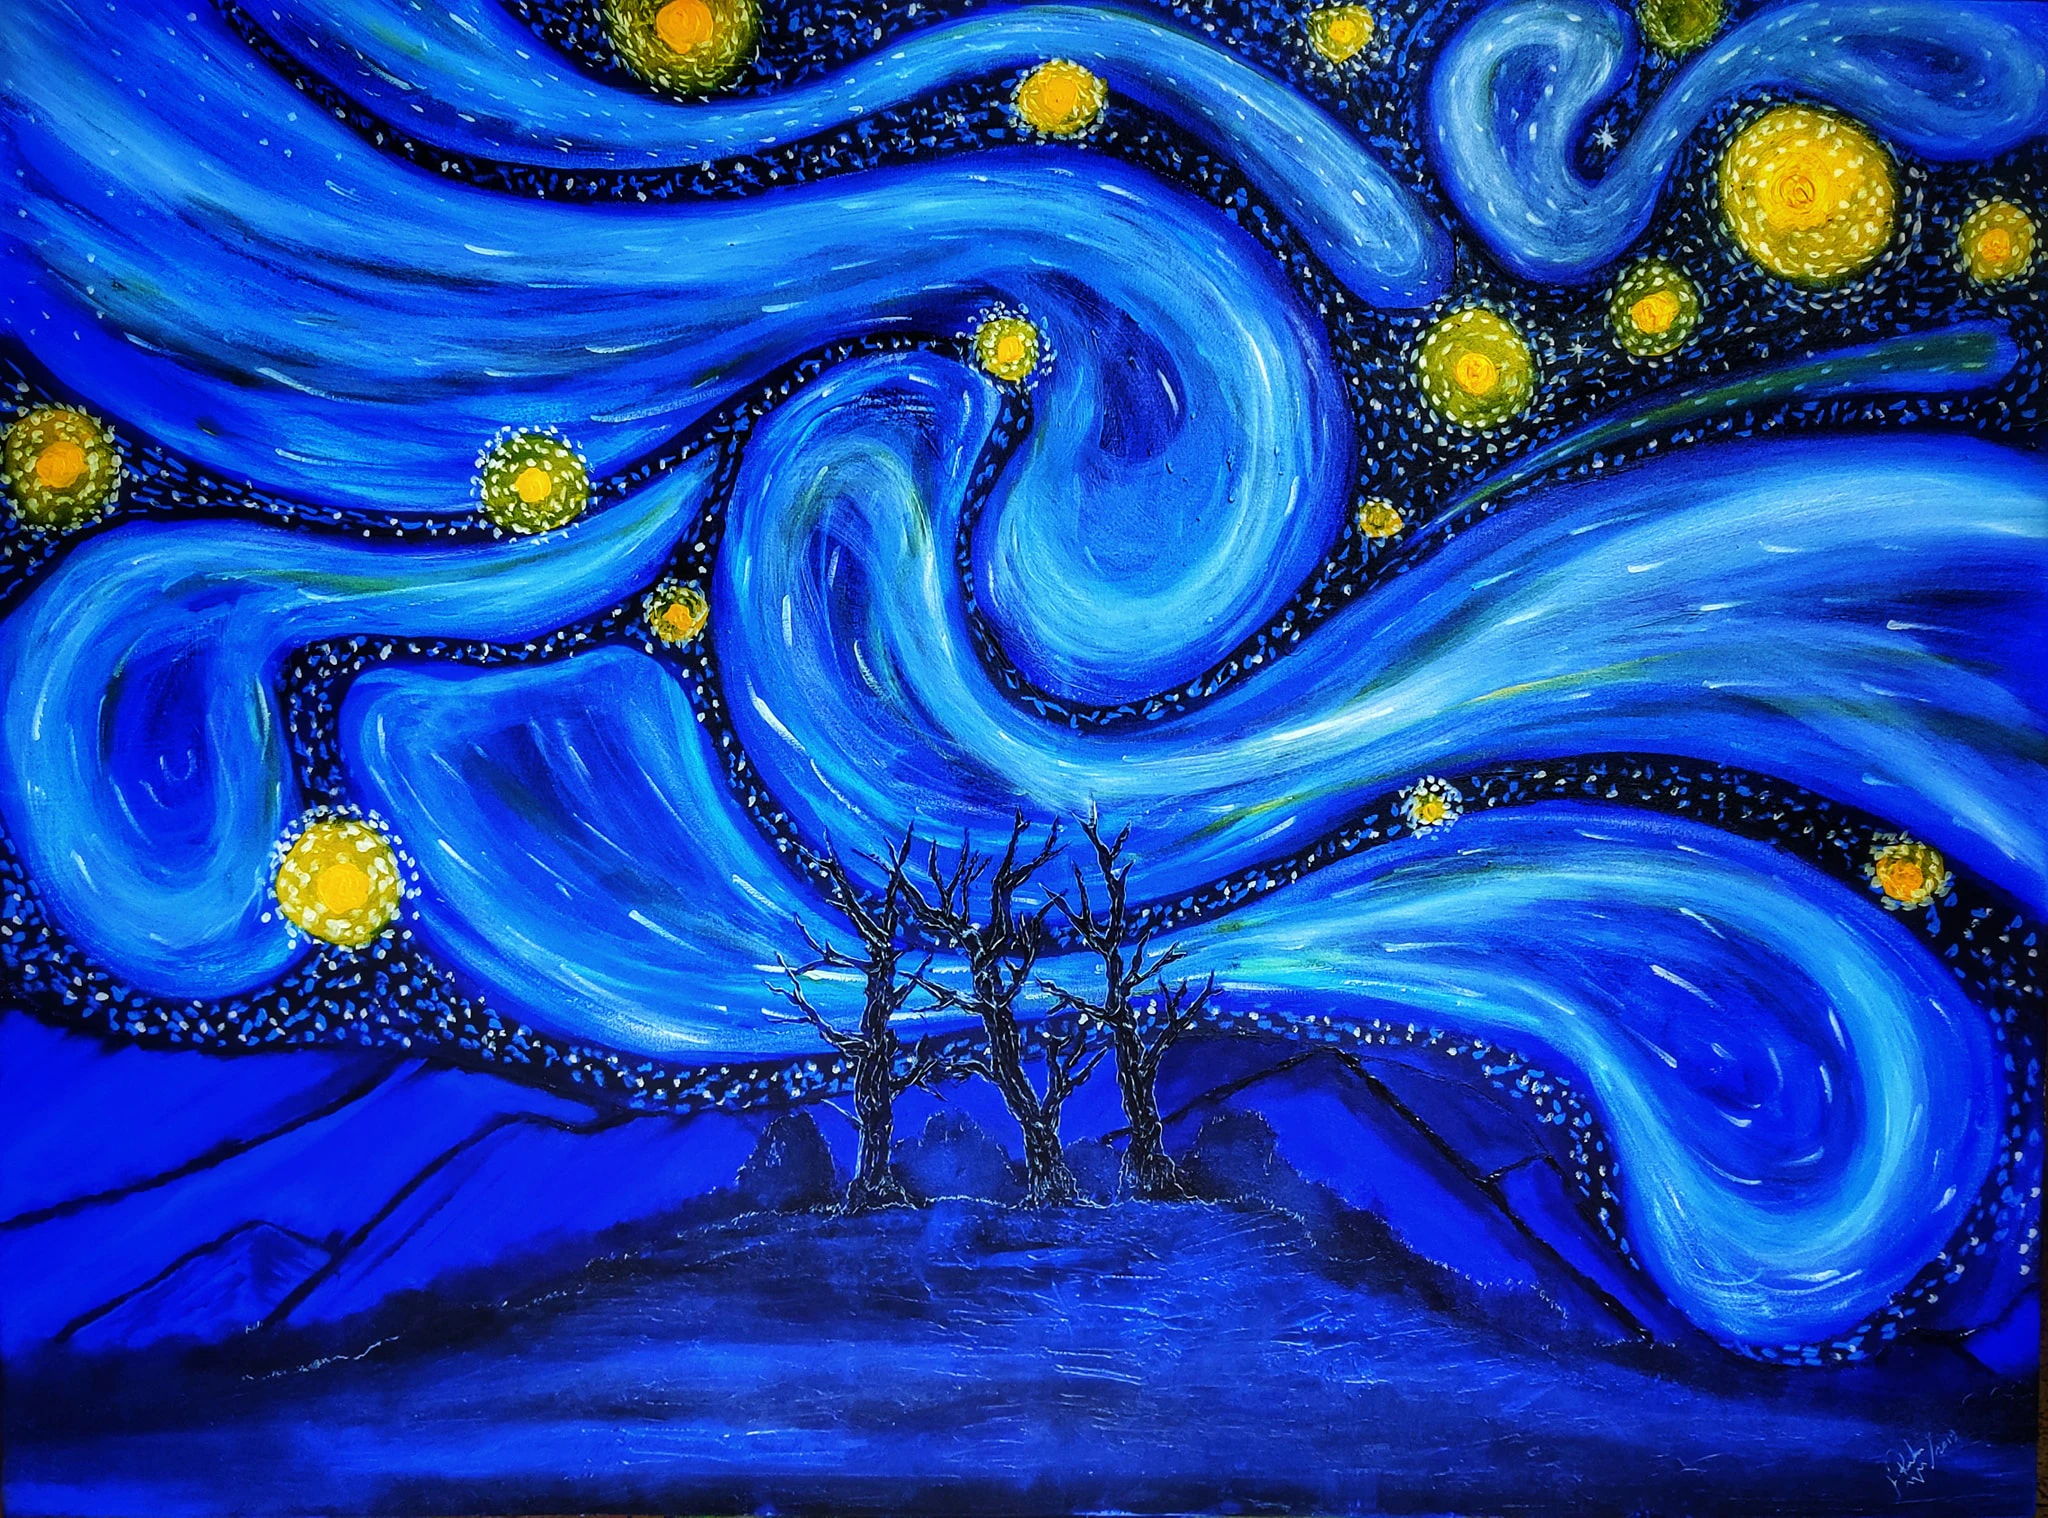 My Starry Night - I